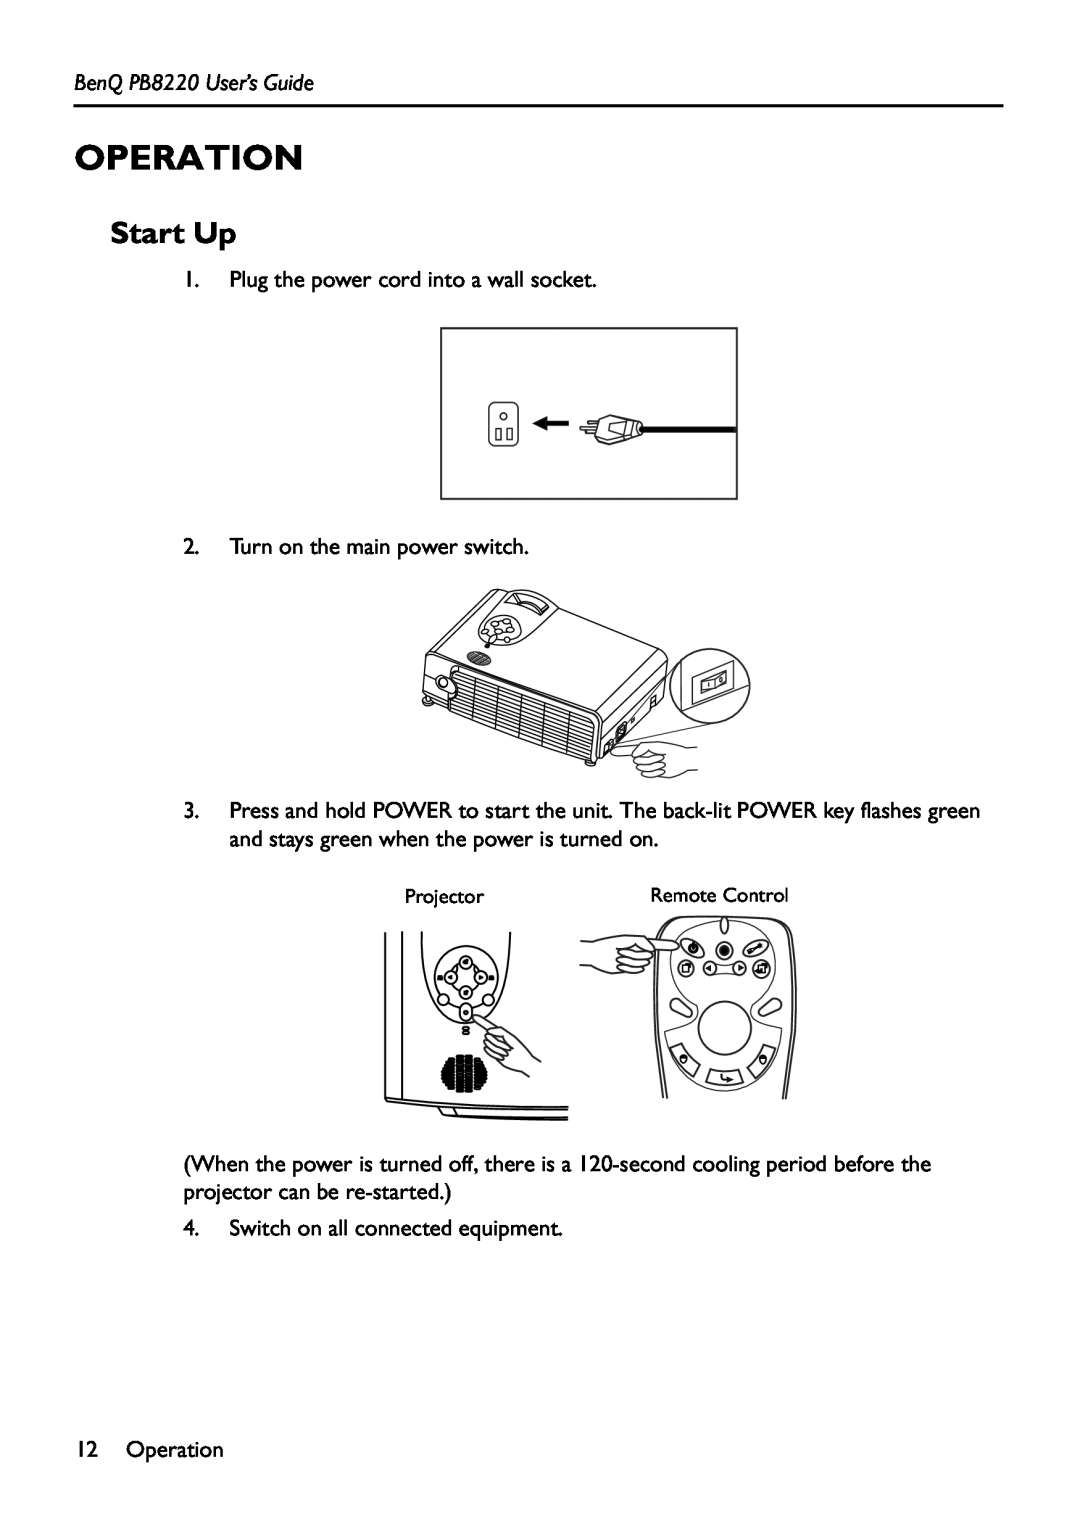 Acer manual Operation, Start Up, BenQ PB8220 User’s Guide 